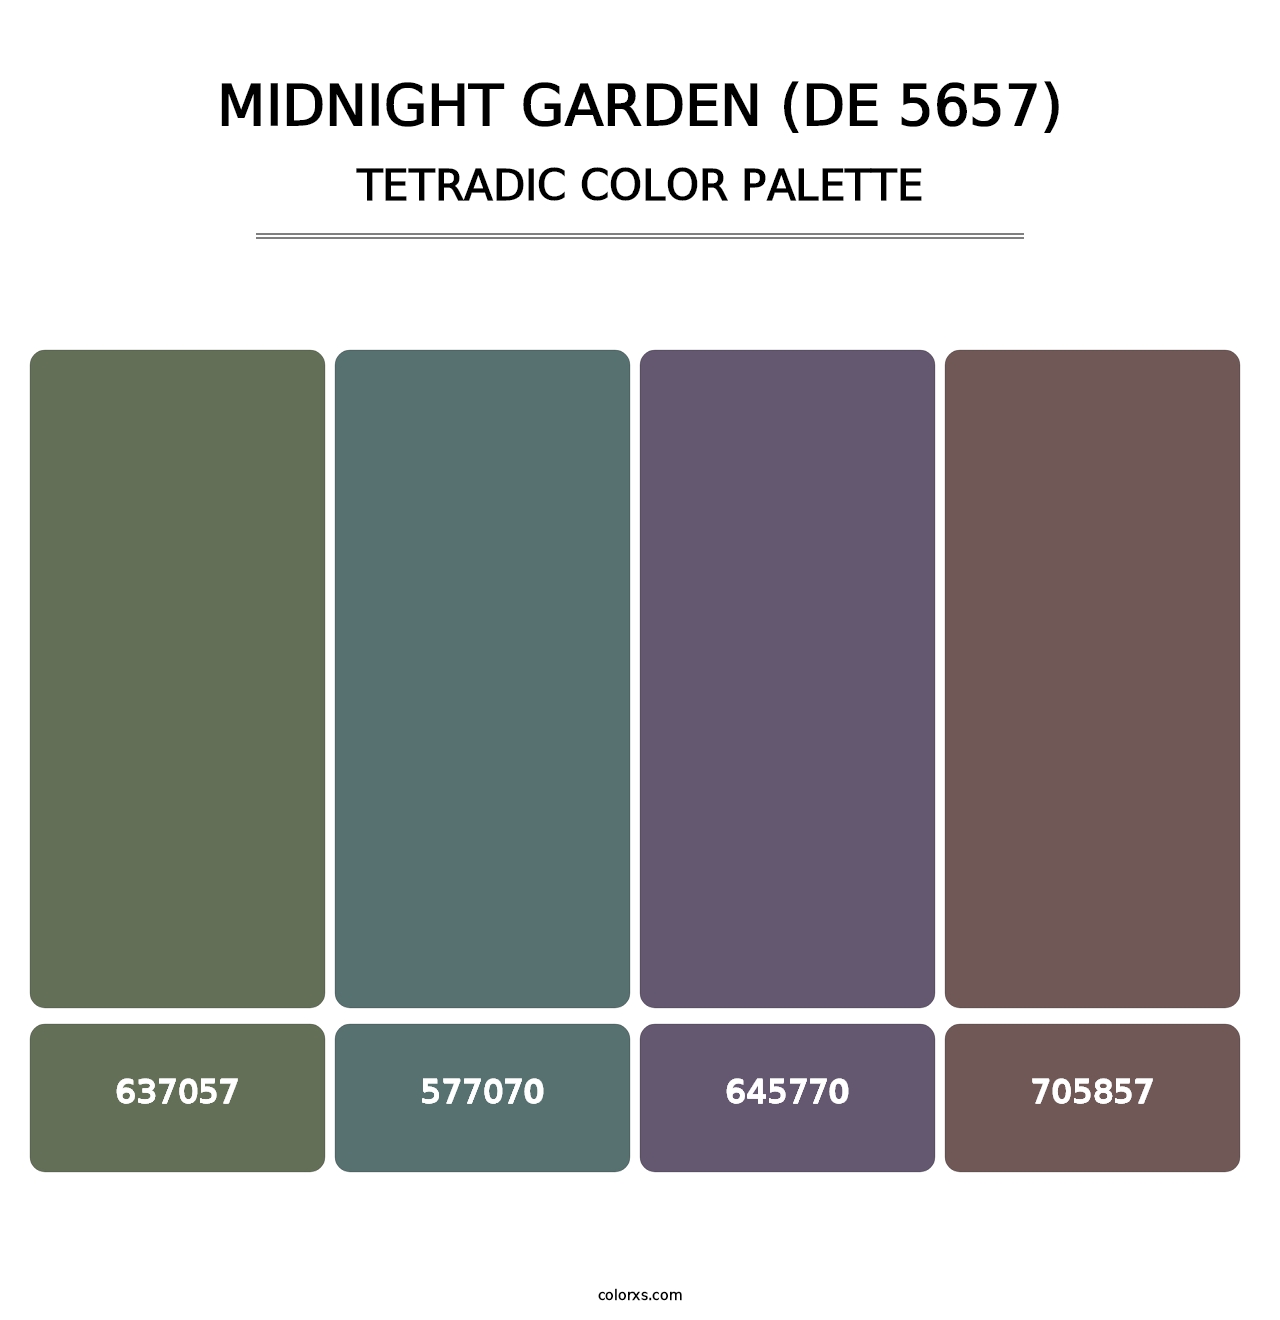 Midnight Garden (DE 5657) - Tetradic Color Palette